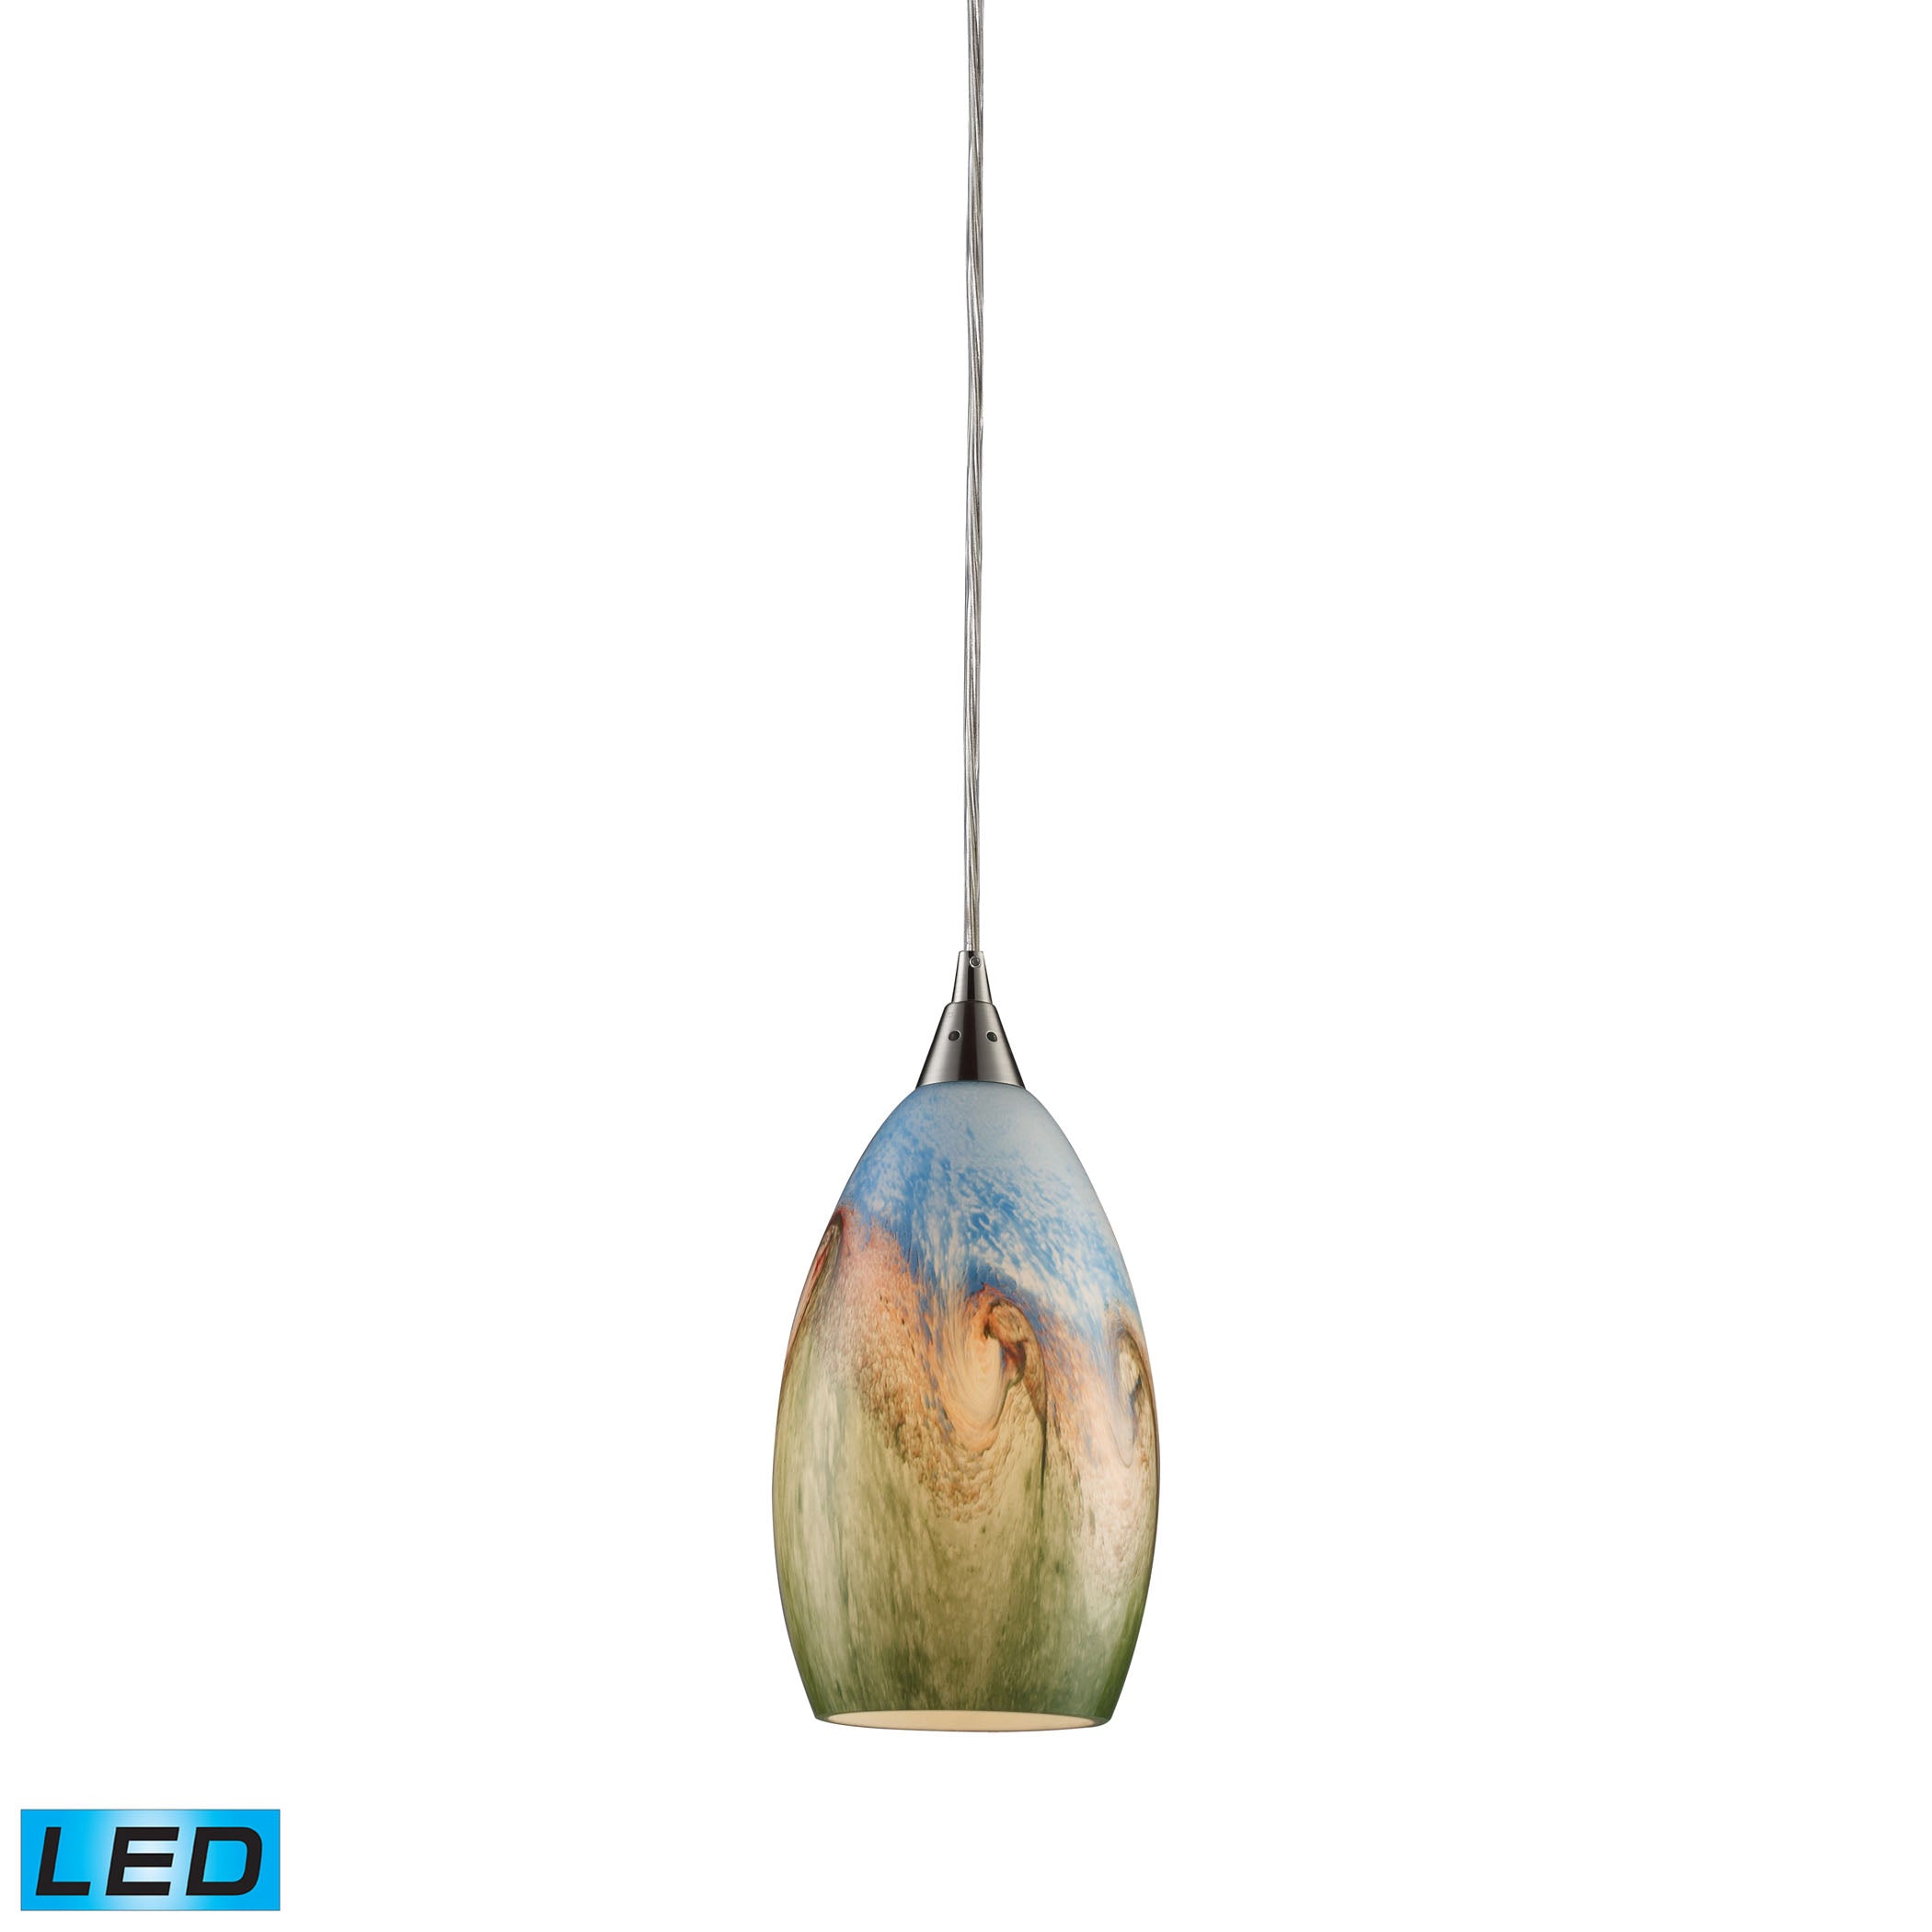 ELK Lighting 10077/1-LED Geologic 1-Light Mini Pendant in Satin Nickel with Multi-colored Glass - Includes LED Bulb